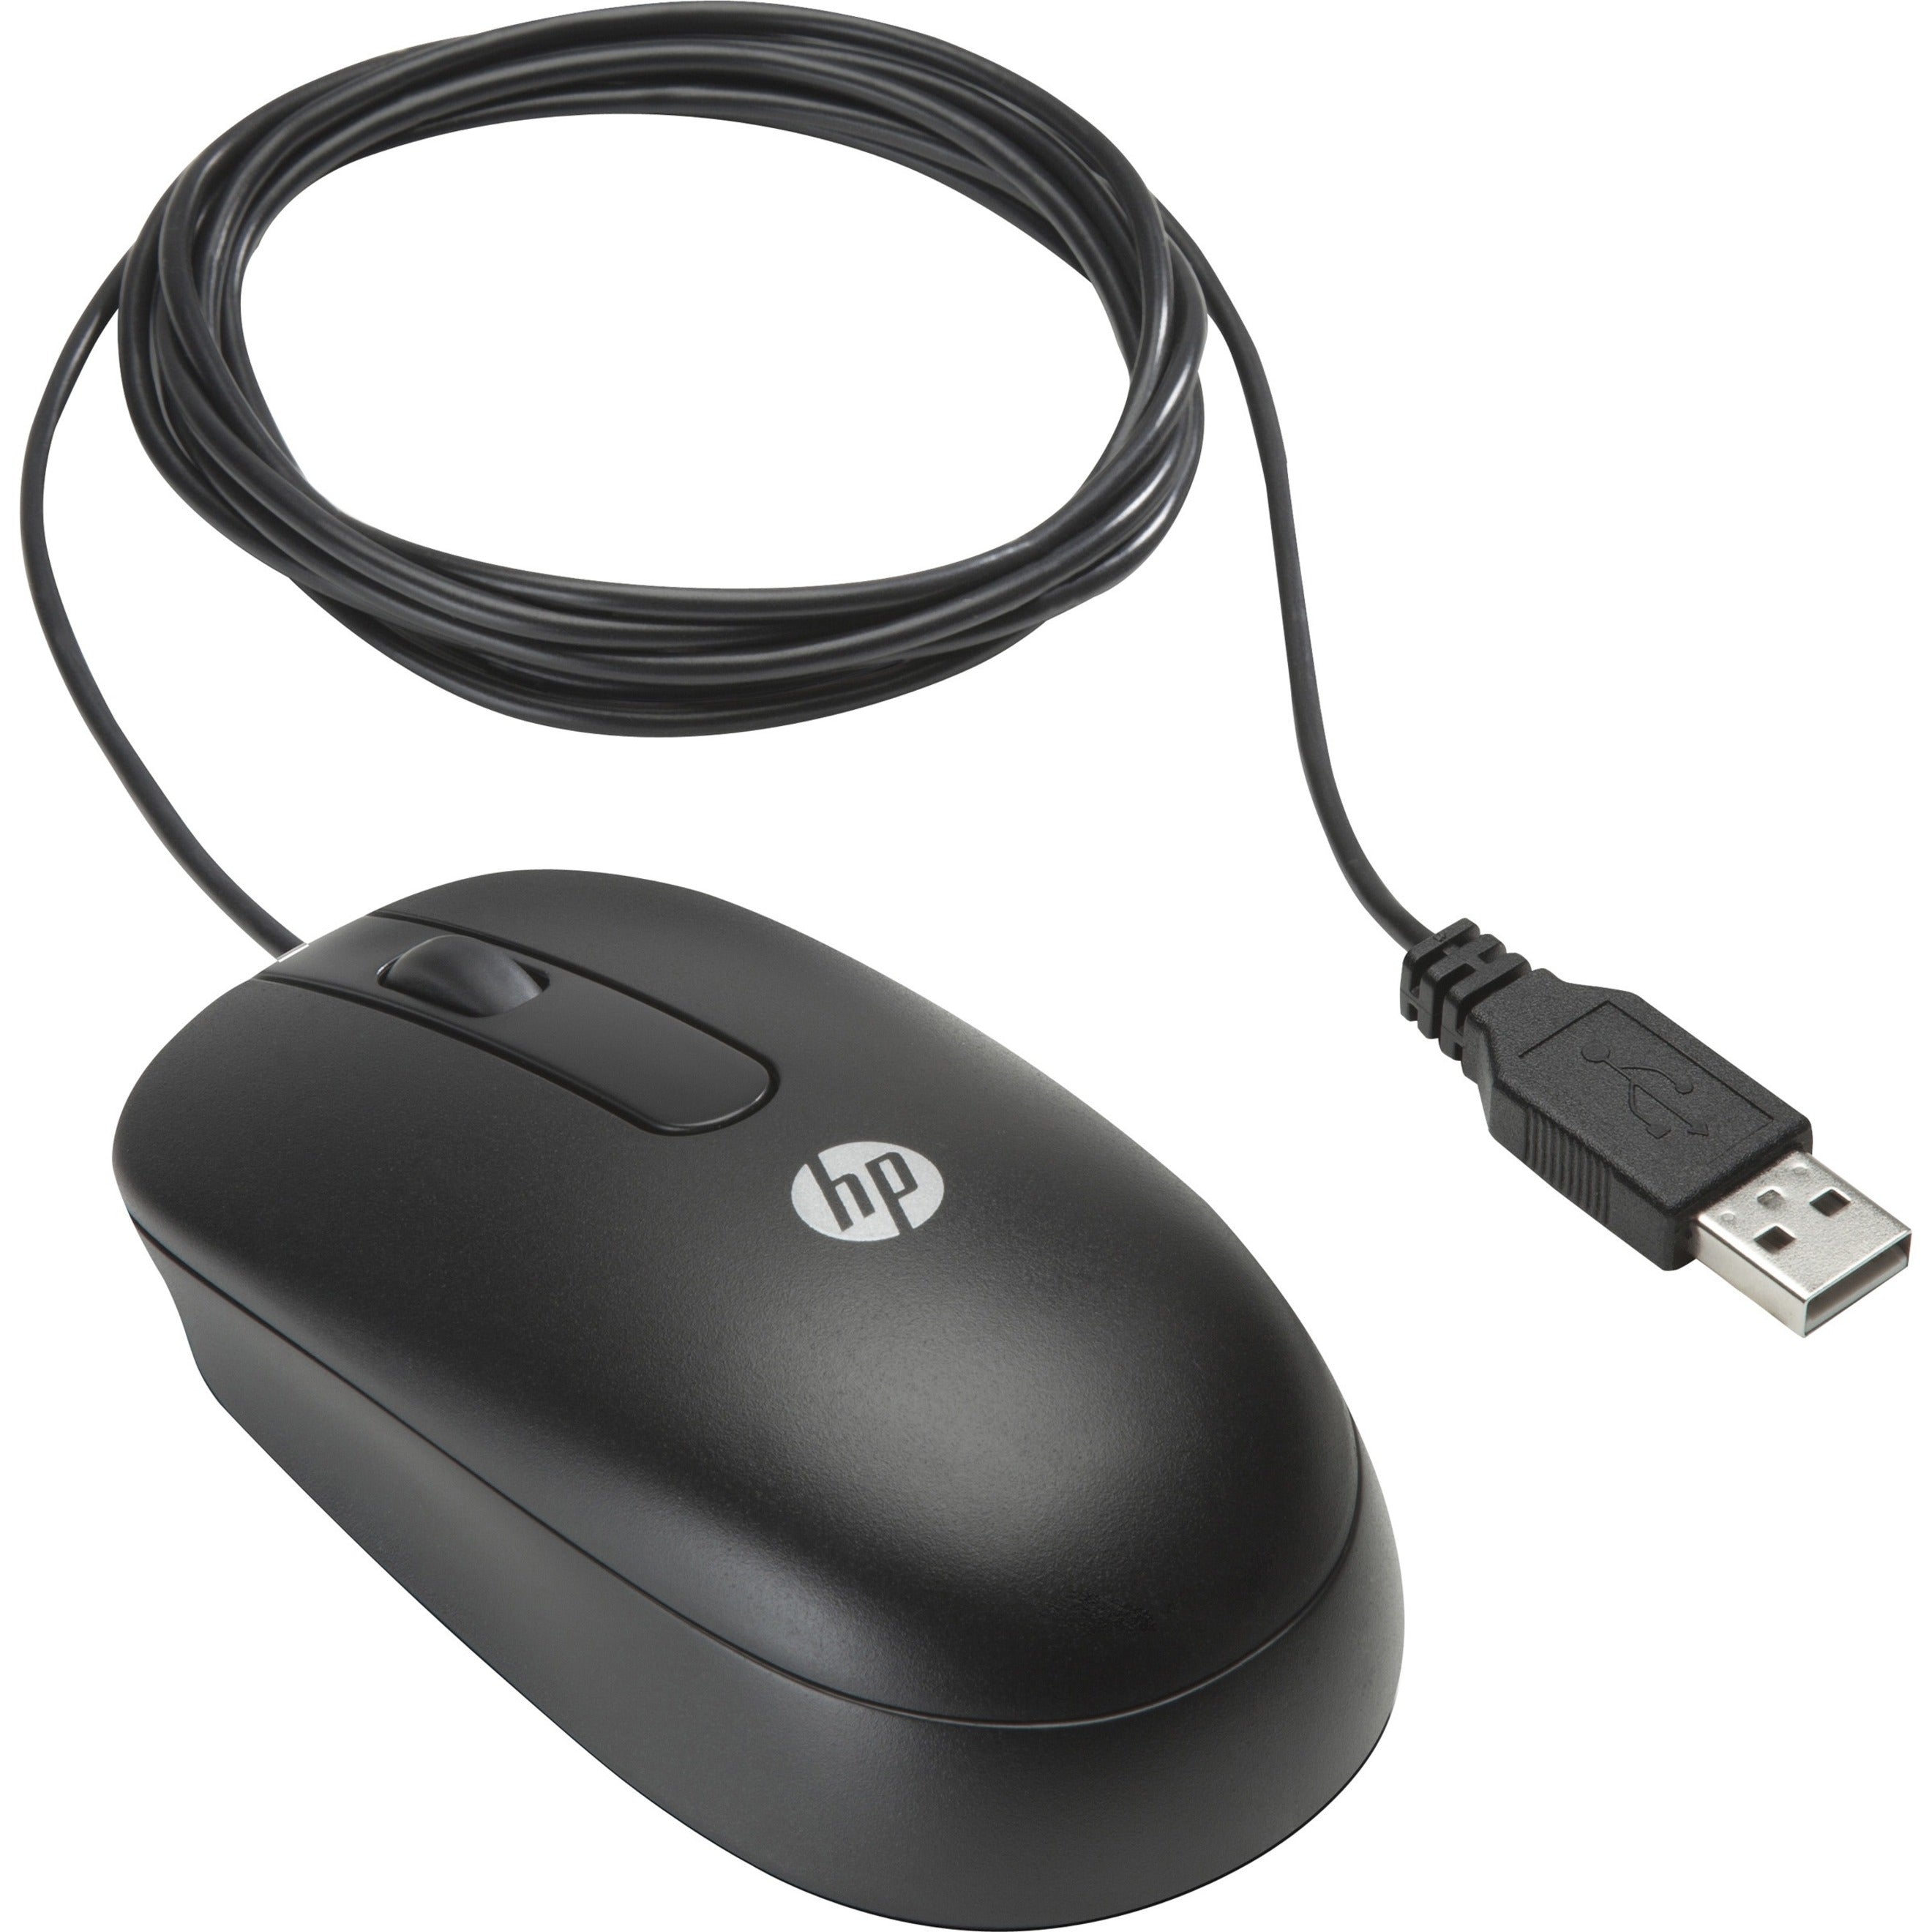 HP QY777AA USB Mouse, Ergonomic Symmetrical Design, Optical Movement Detection, 3 Buttons, 800 DPI, 5.91 ft Cable